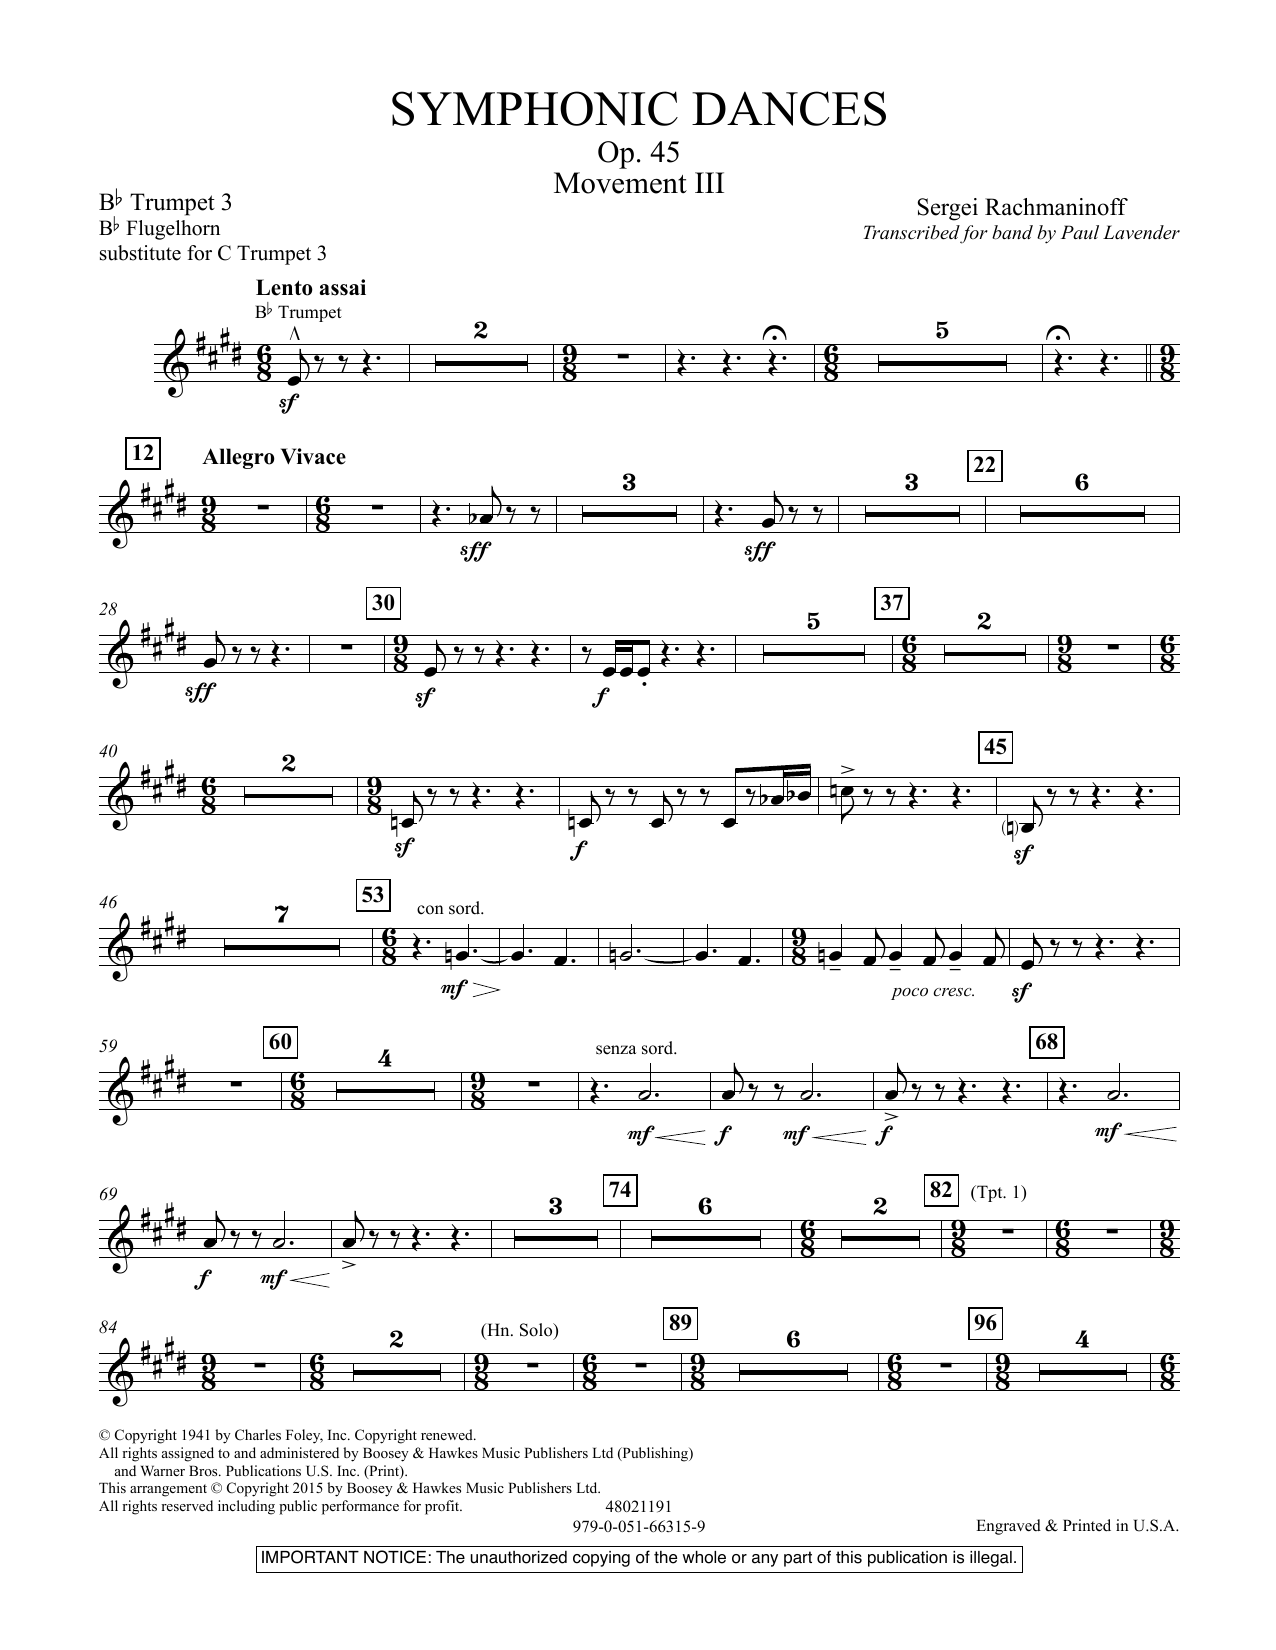 Paul Lavender Symphonic Dances, Op.45 - Bb Trumpet Parts - Digital Only - Bb Trumpet 3 (sub. C Tpt. 3) Sheet Music Notes & Chords for Concert Band - Download or Print PDF